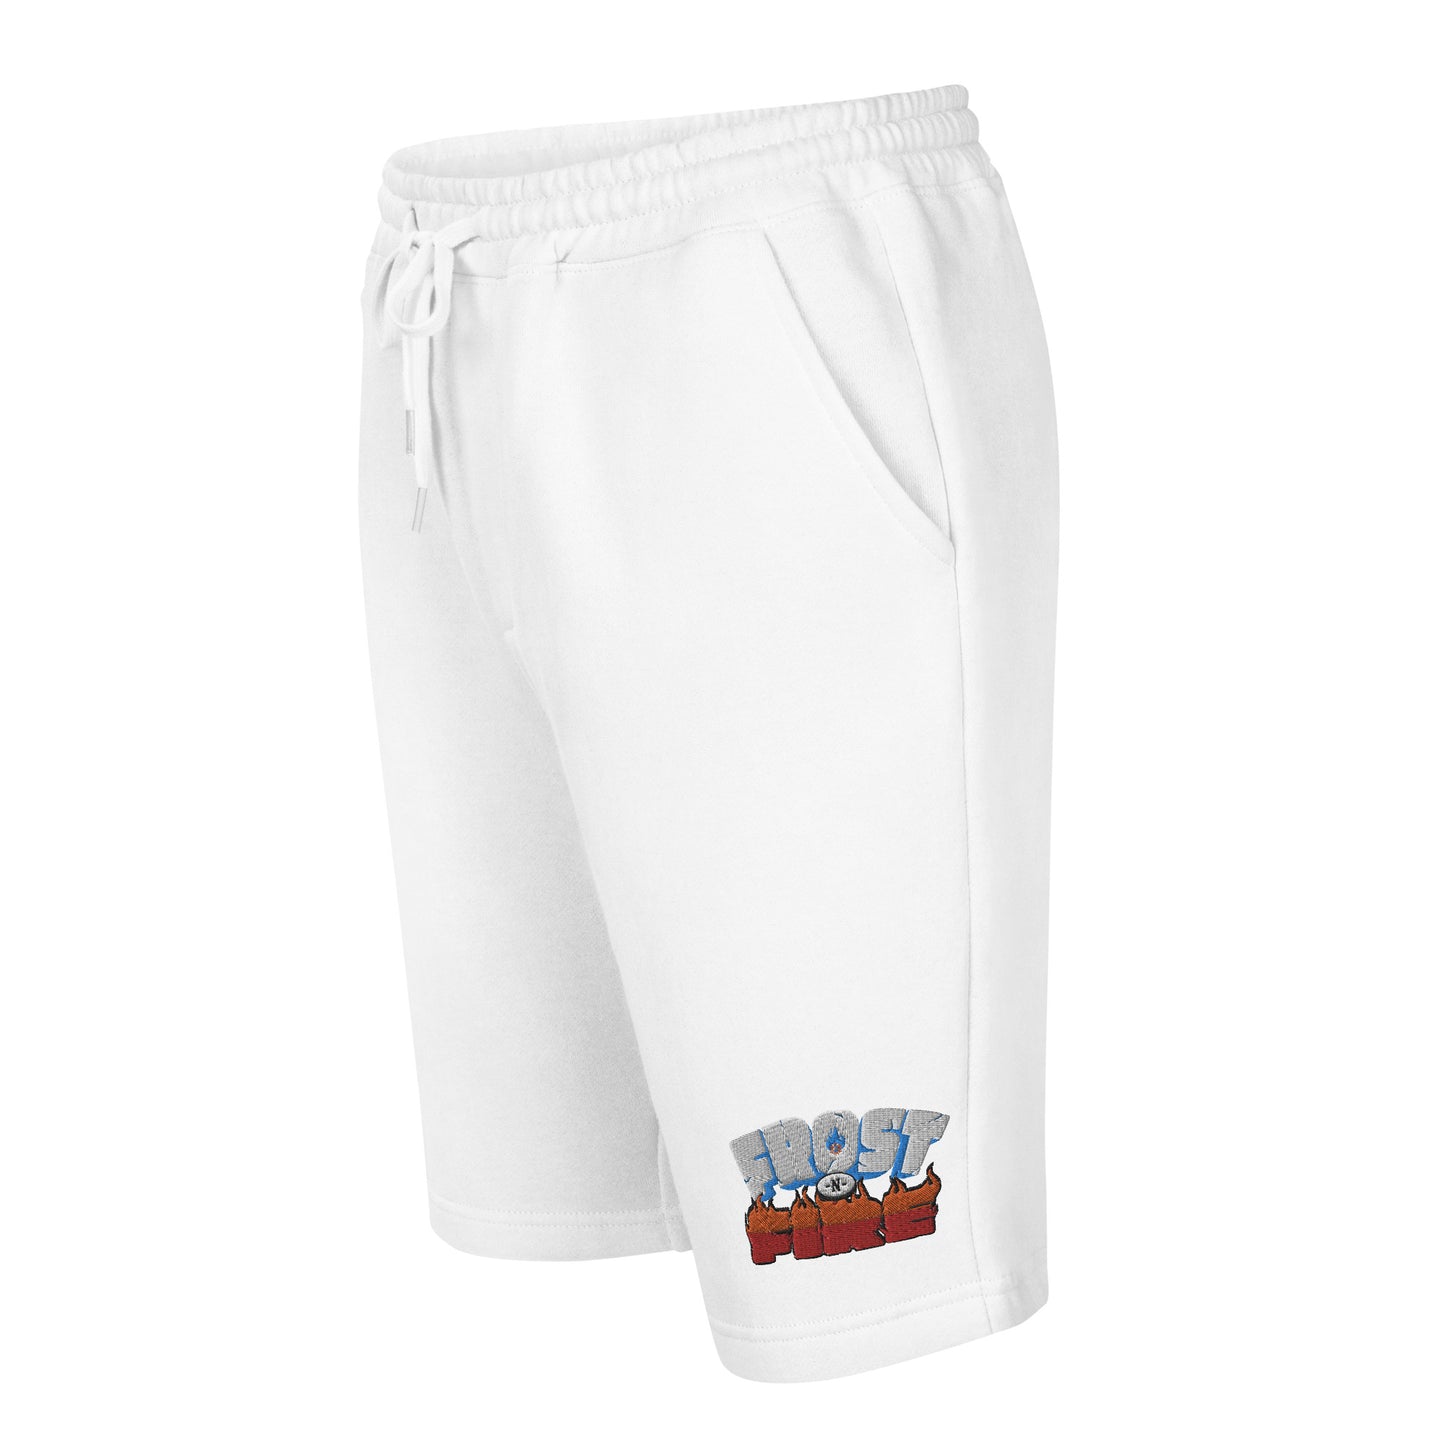 FrostnFire fleece shorts (Embroidered)